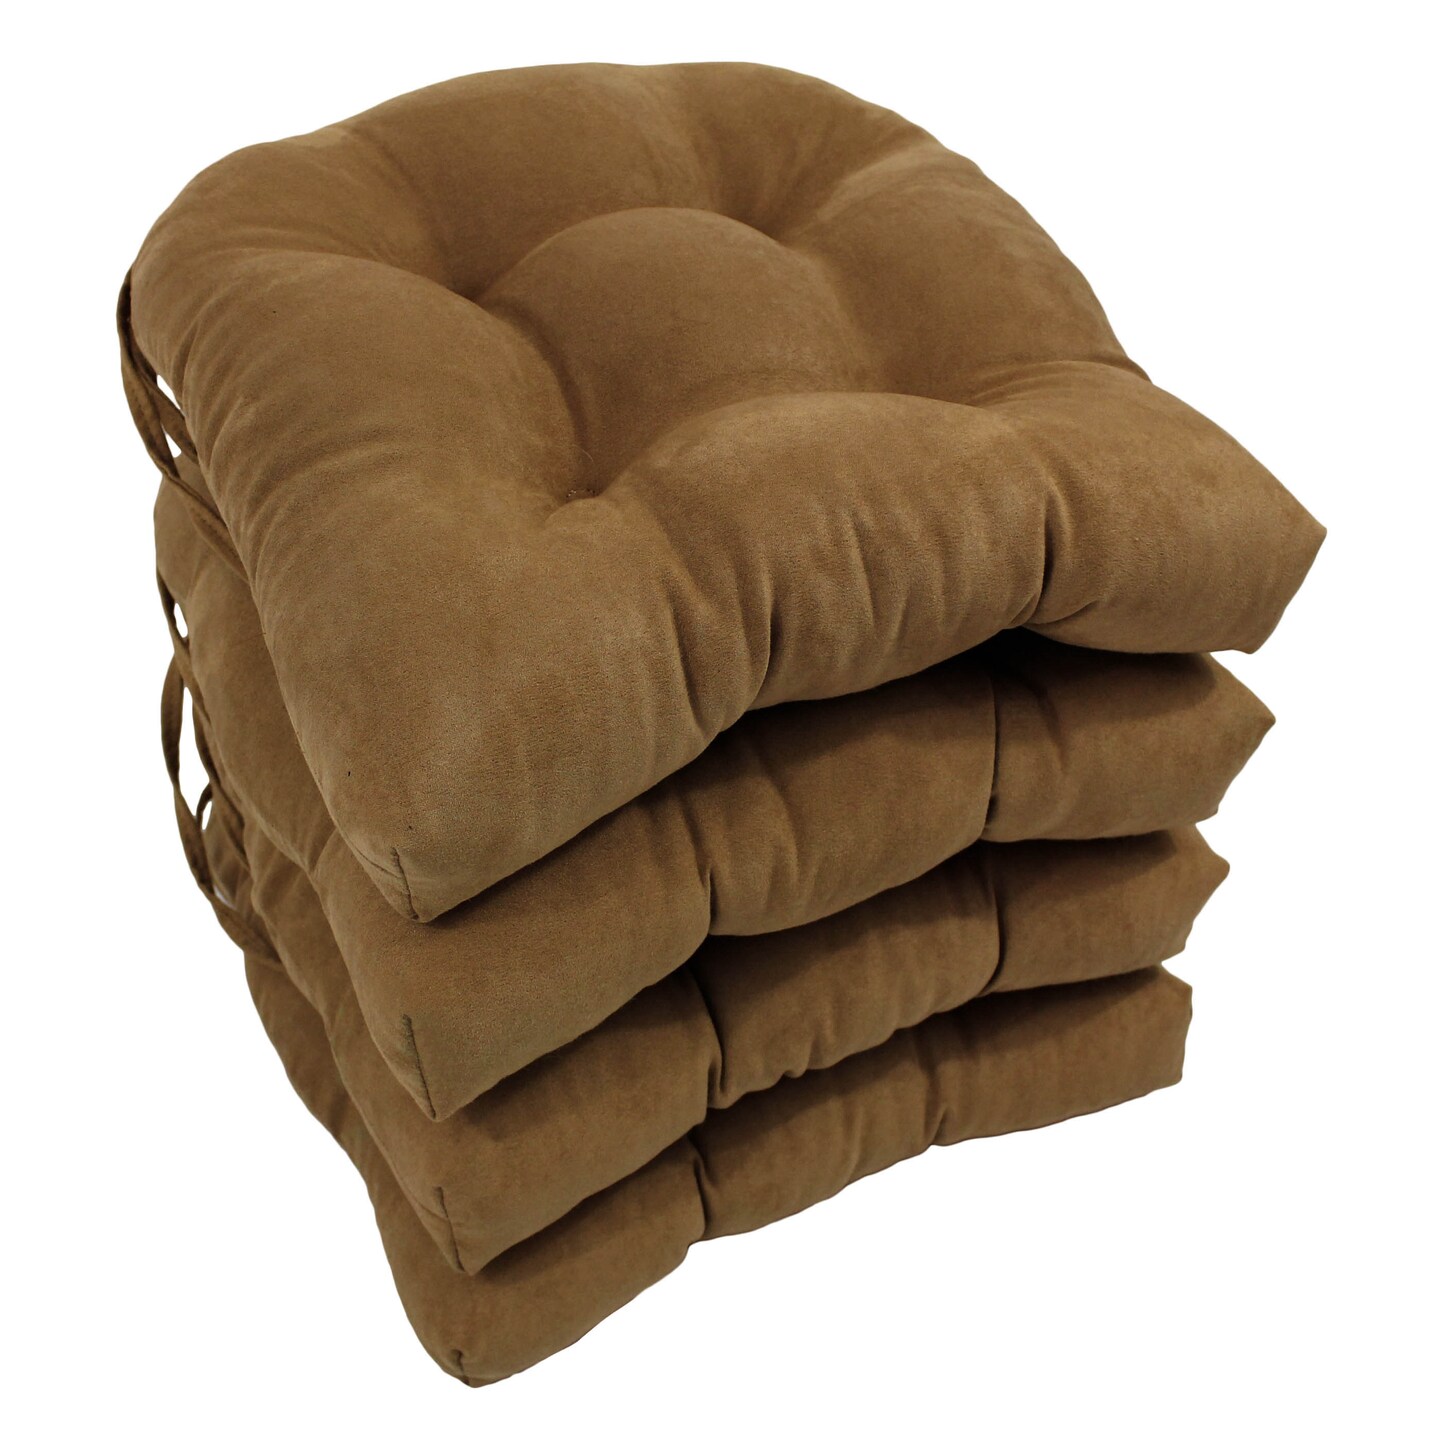 U-shape Cushion, Cushion for Chair, Chair Cushion, Pad With Ties 